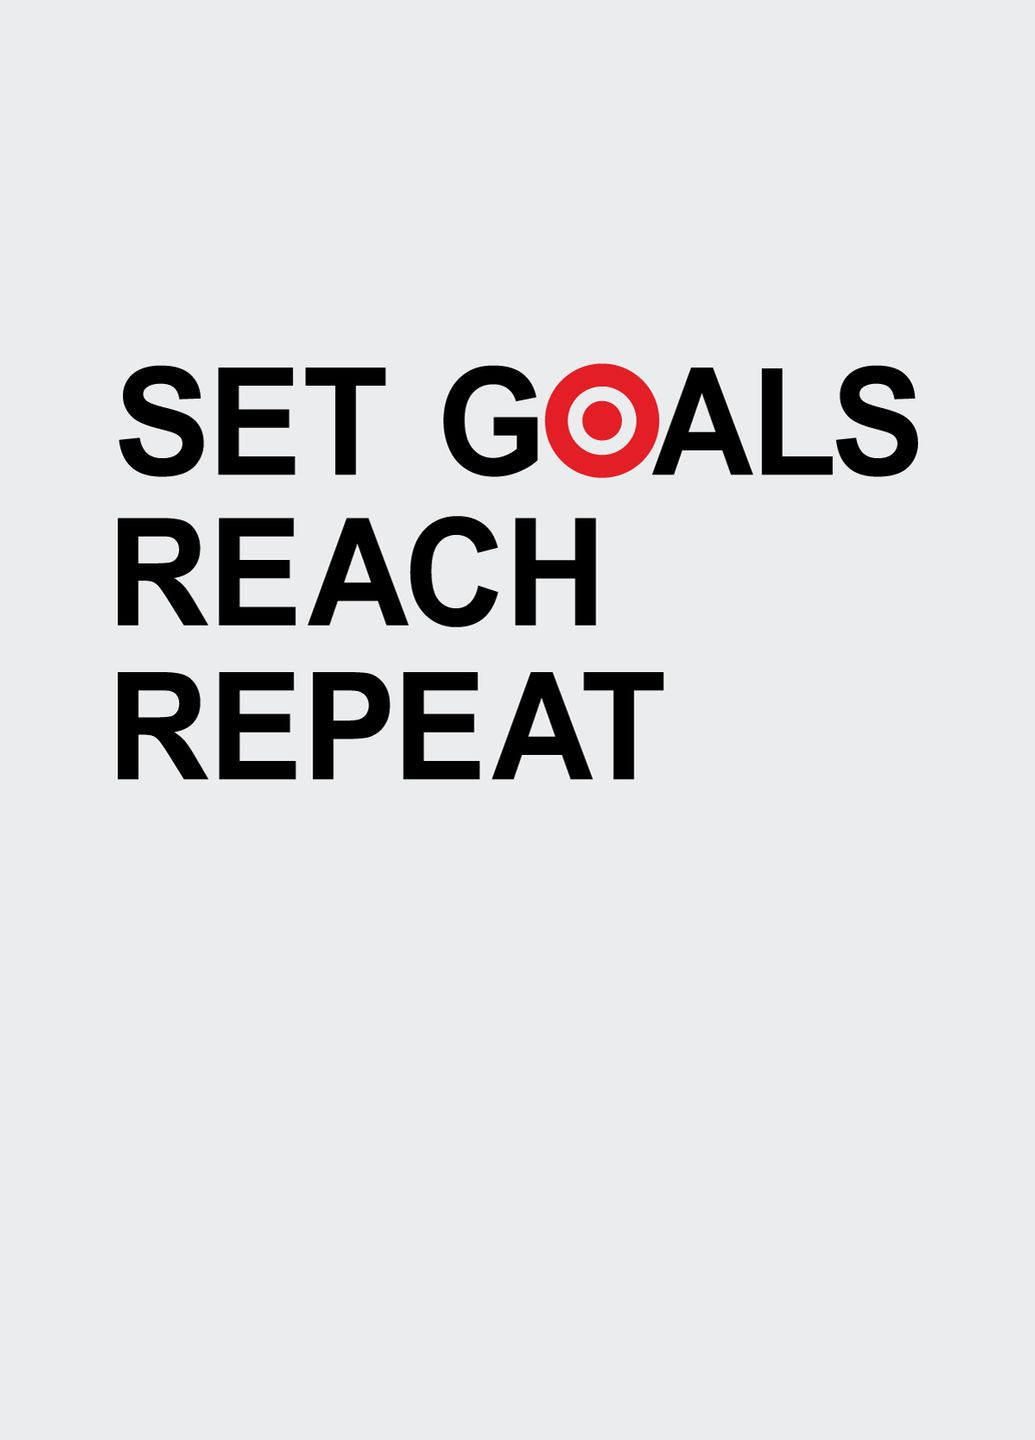 Постер "Set Goals Reach Repeat" (BDPOS9) BeriDari (268035676)